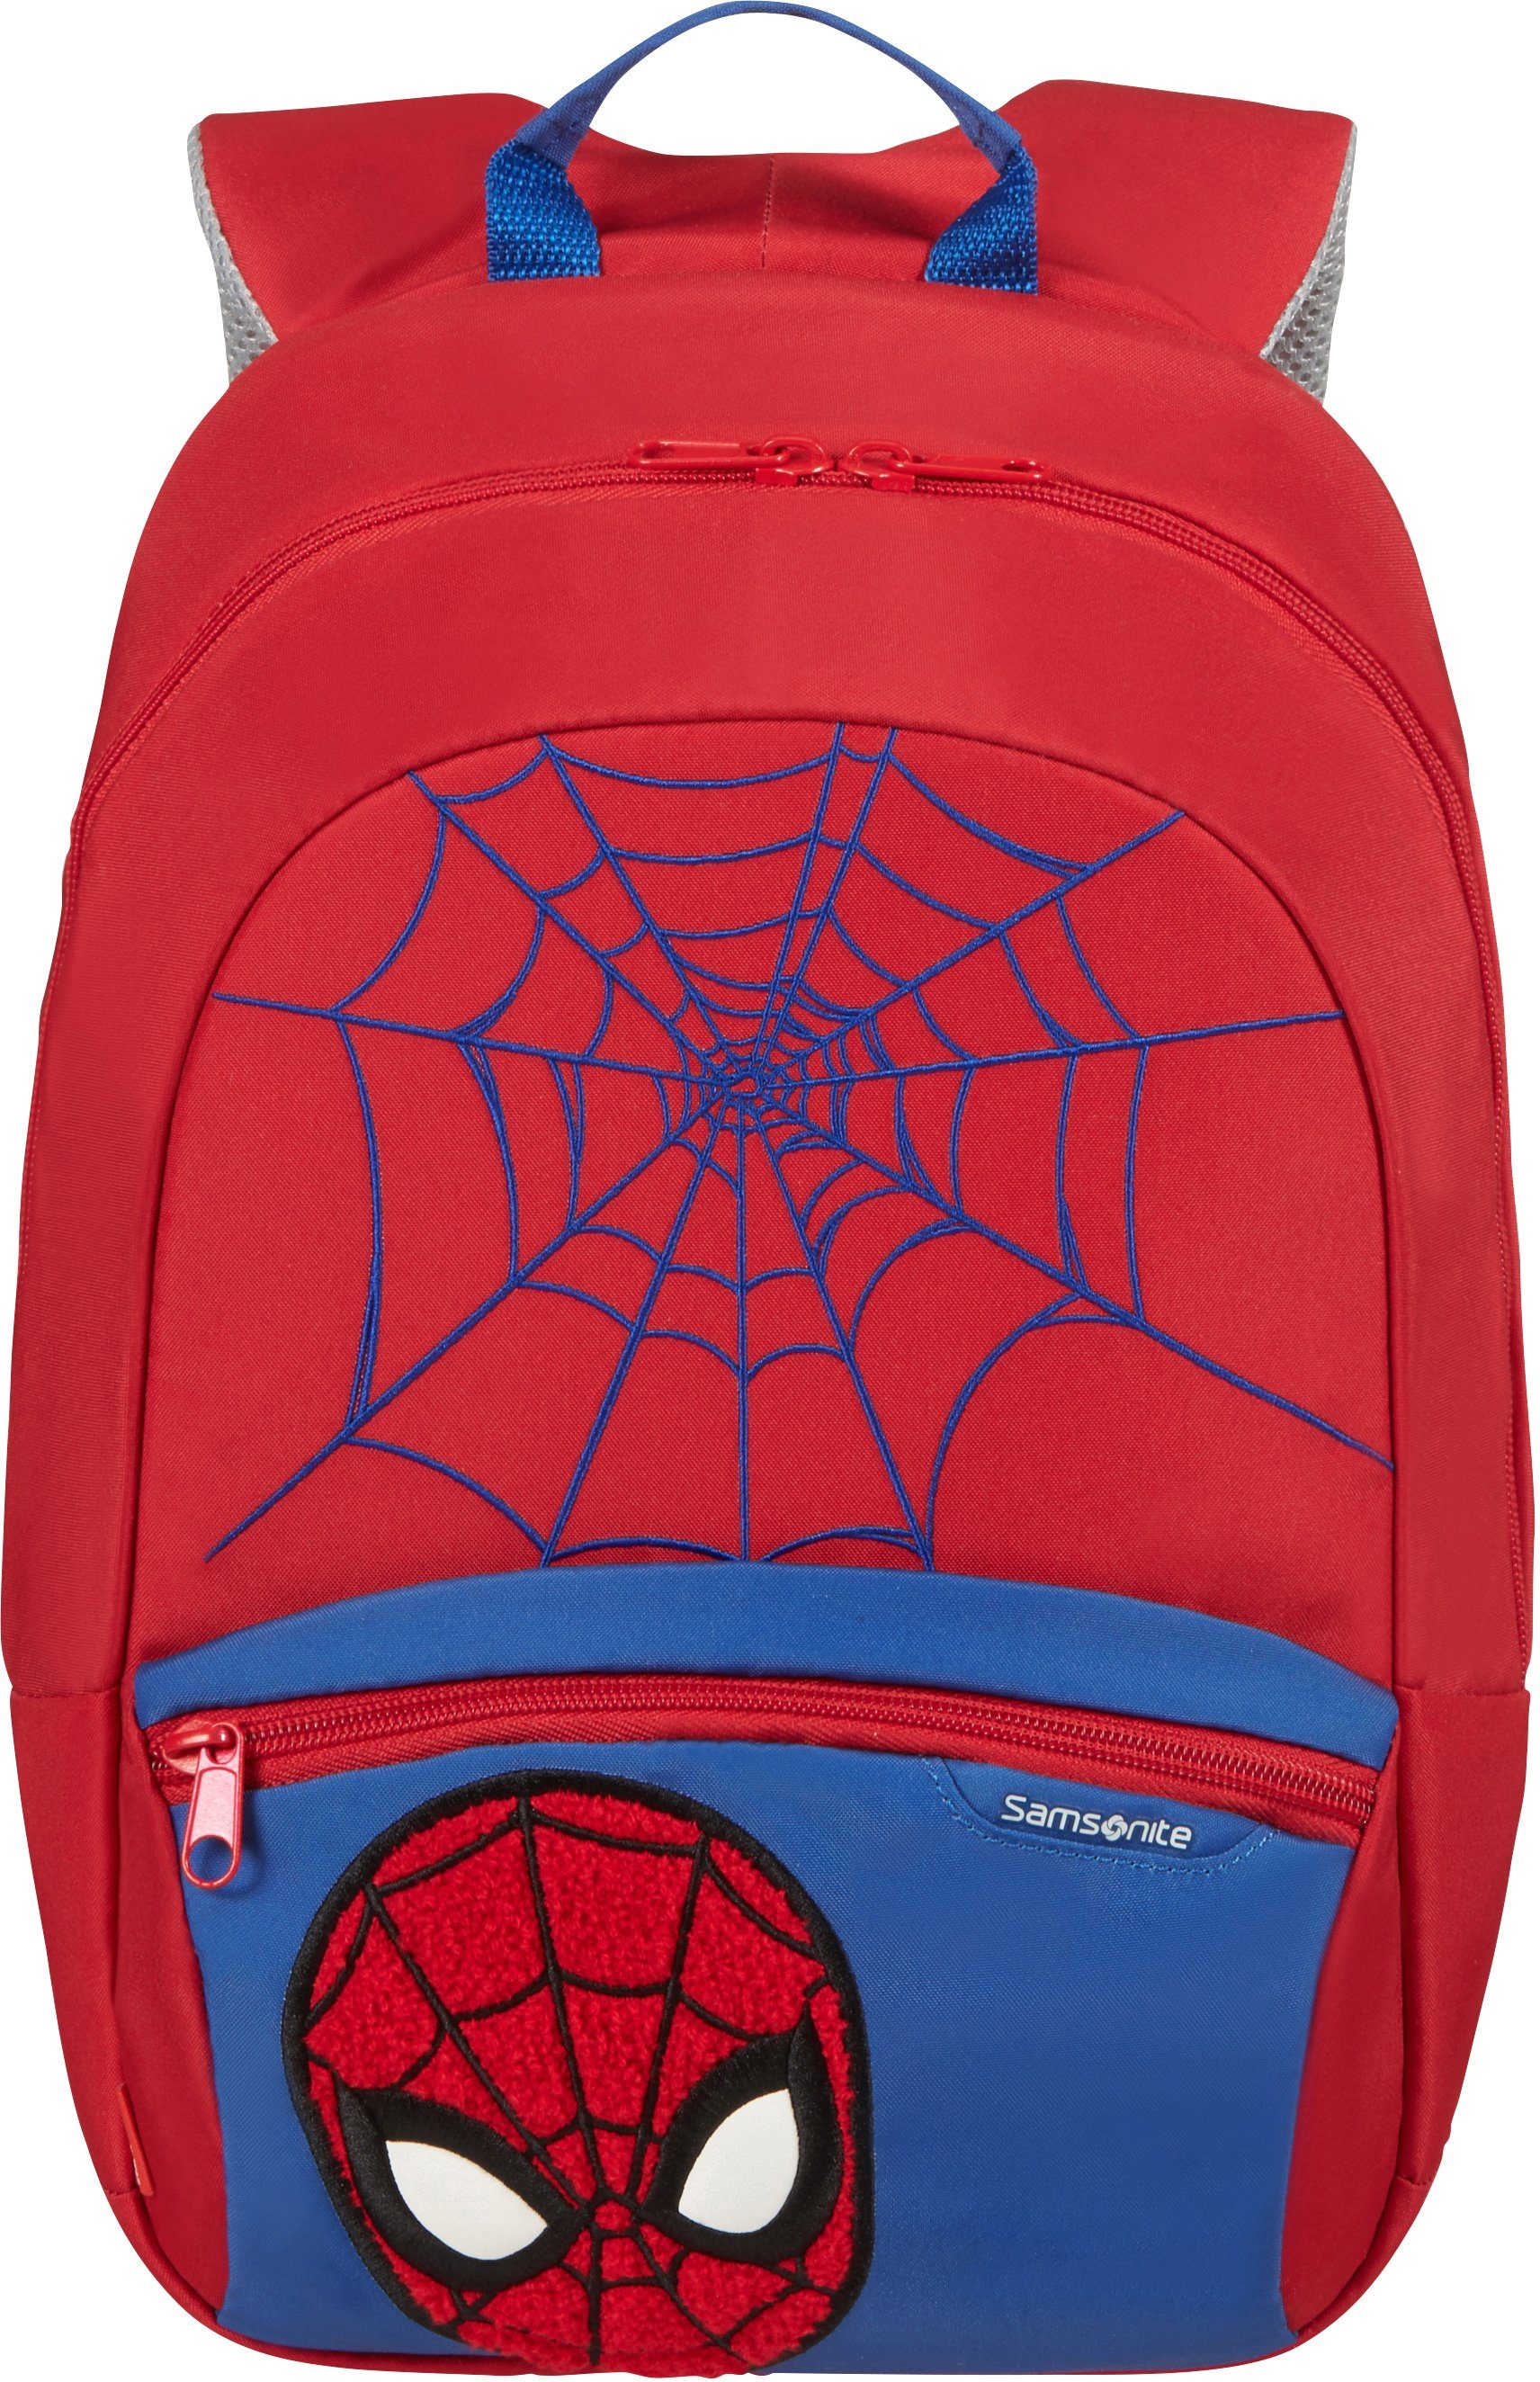 Über 80% Rabatt Samsonite Kinderrucksack Disney S+, 2.0, Ultimate Spiderman